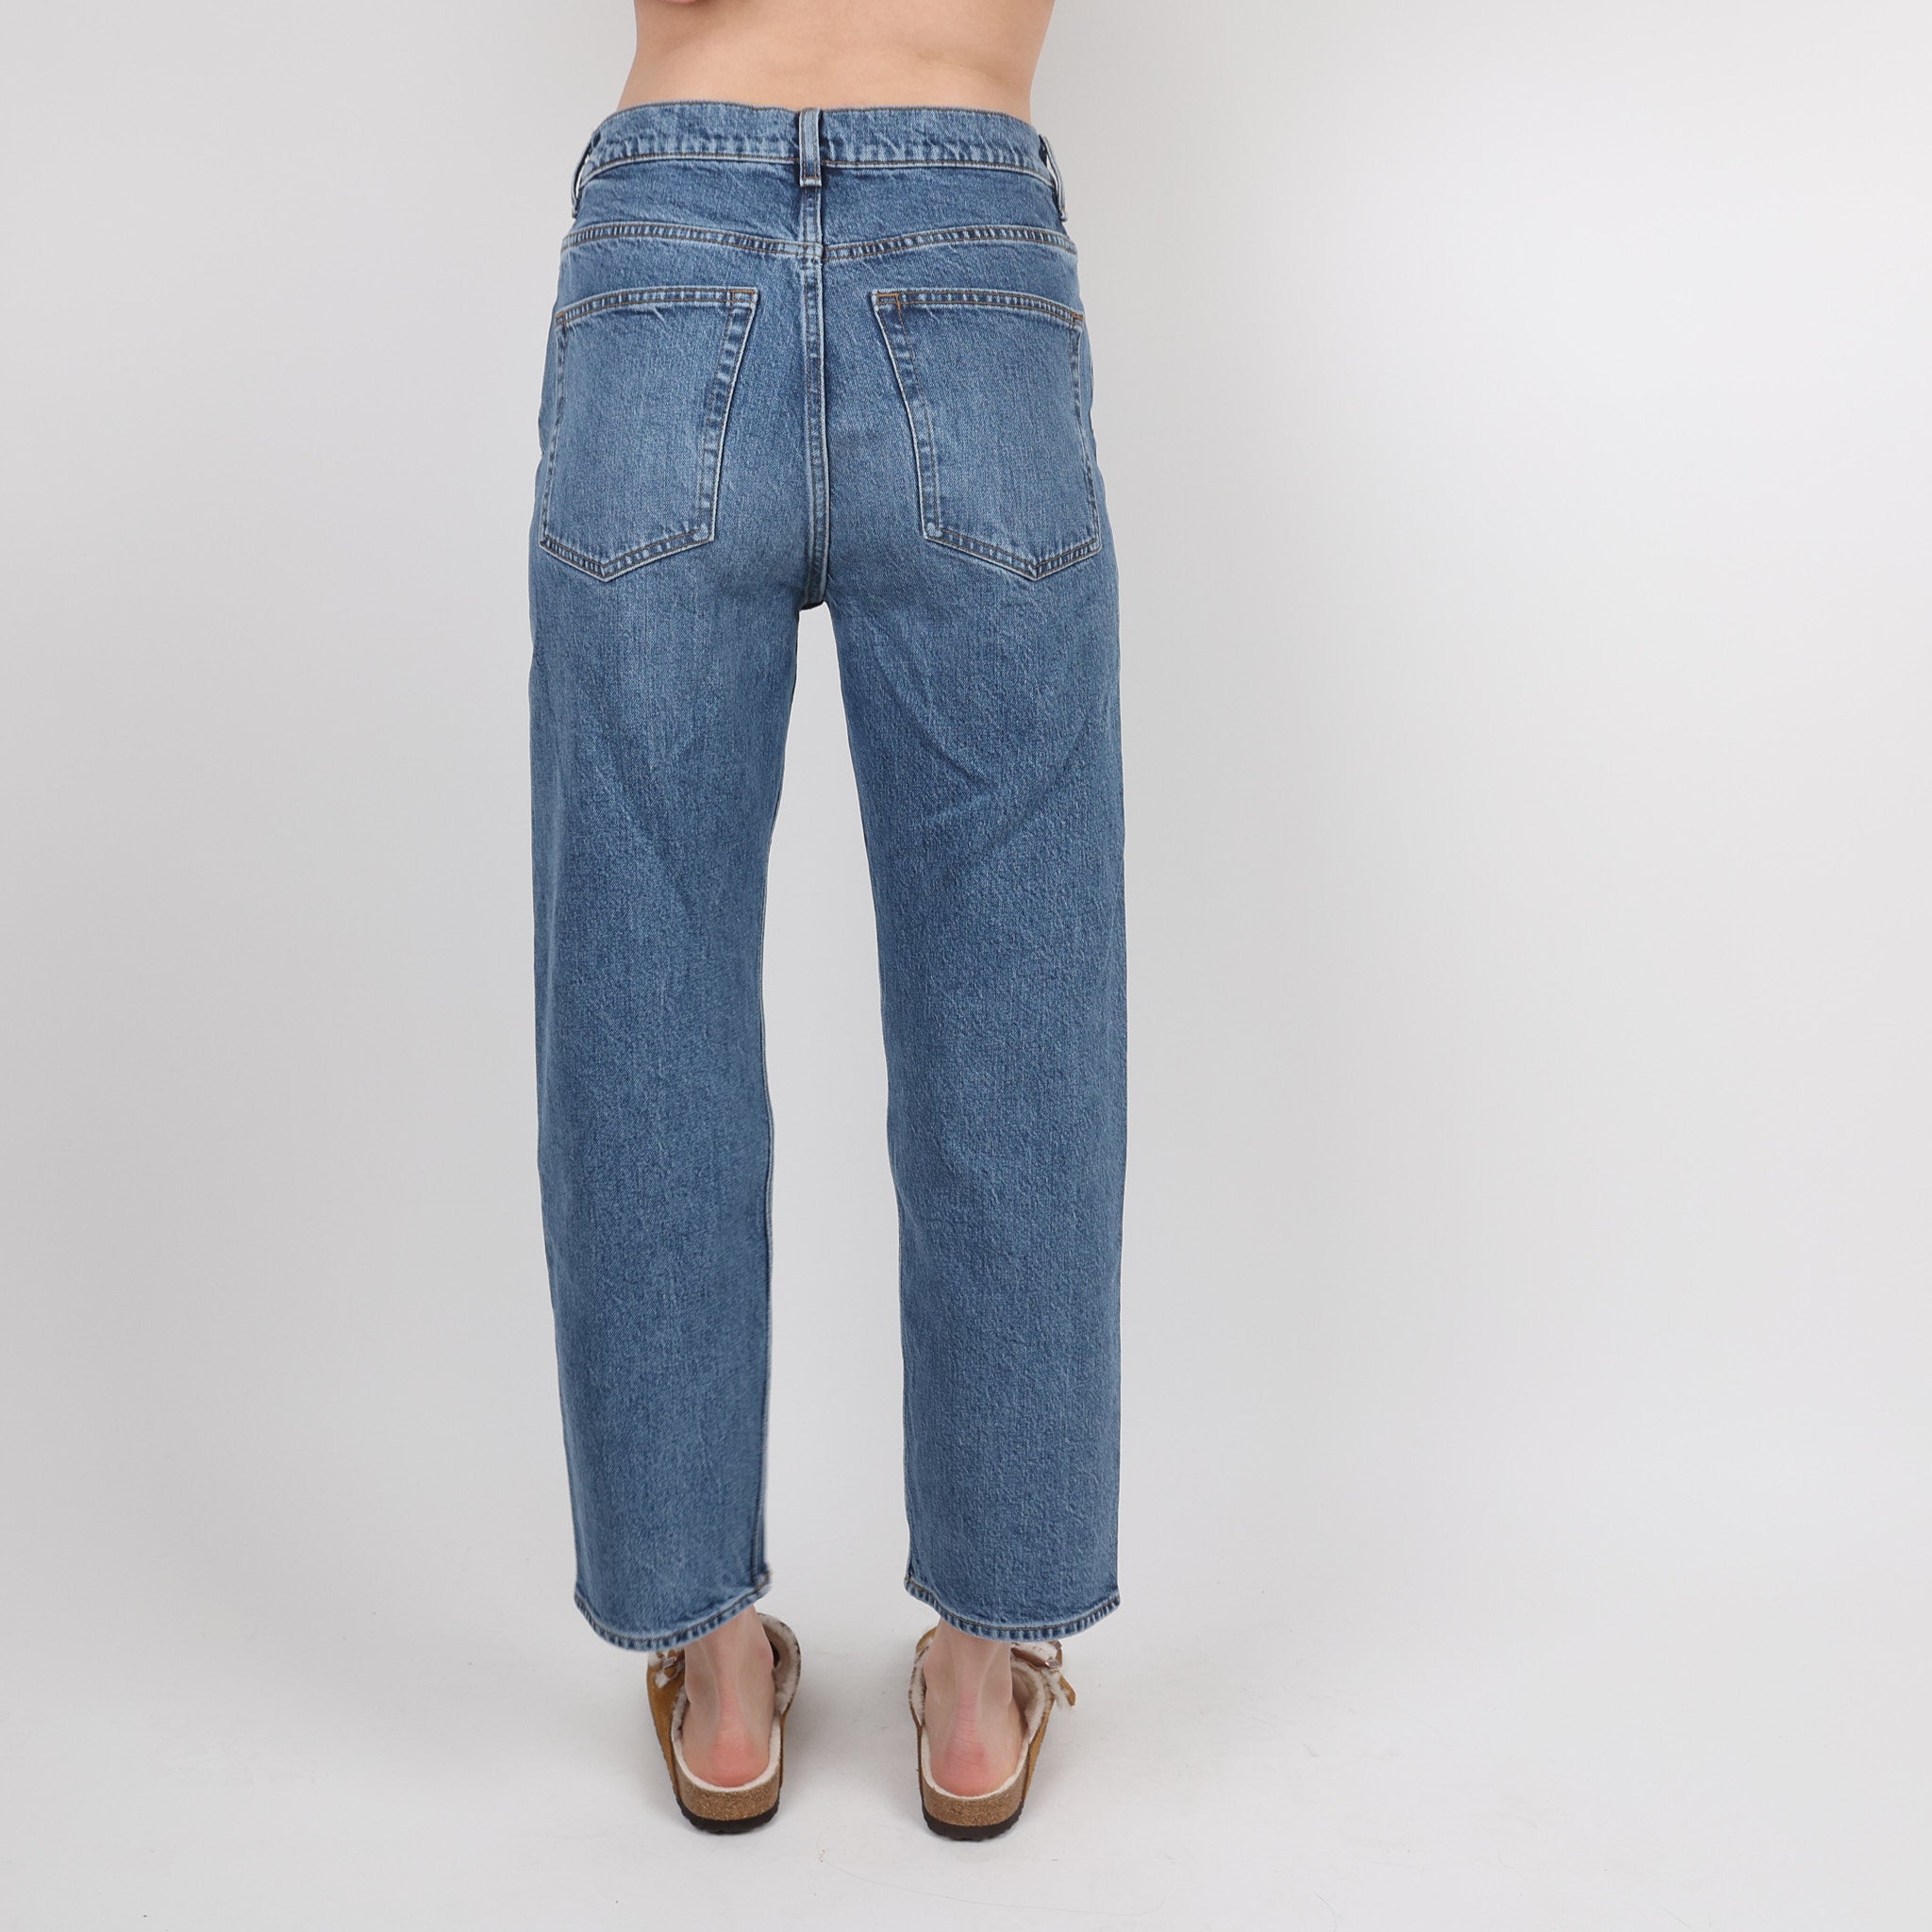 Jeans, Waist 29